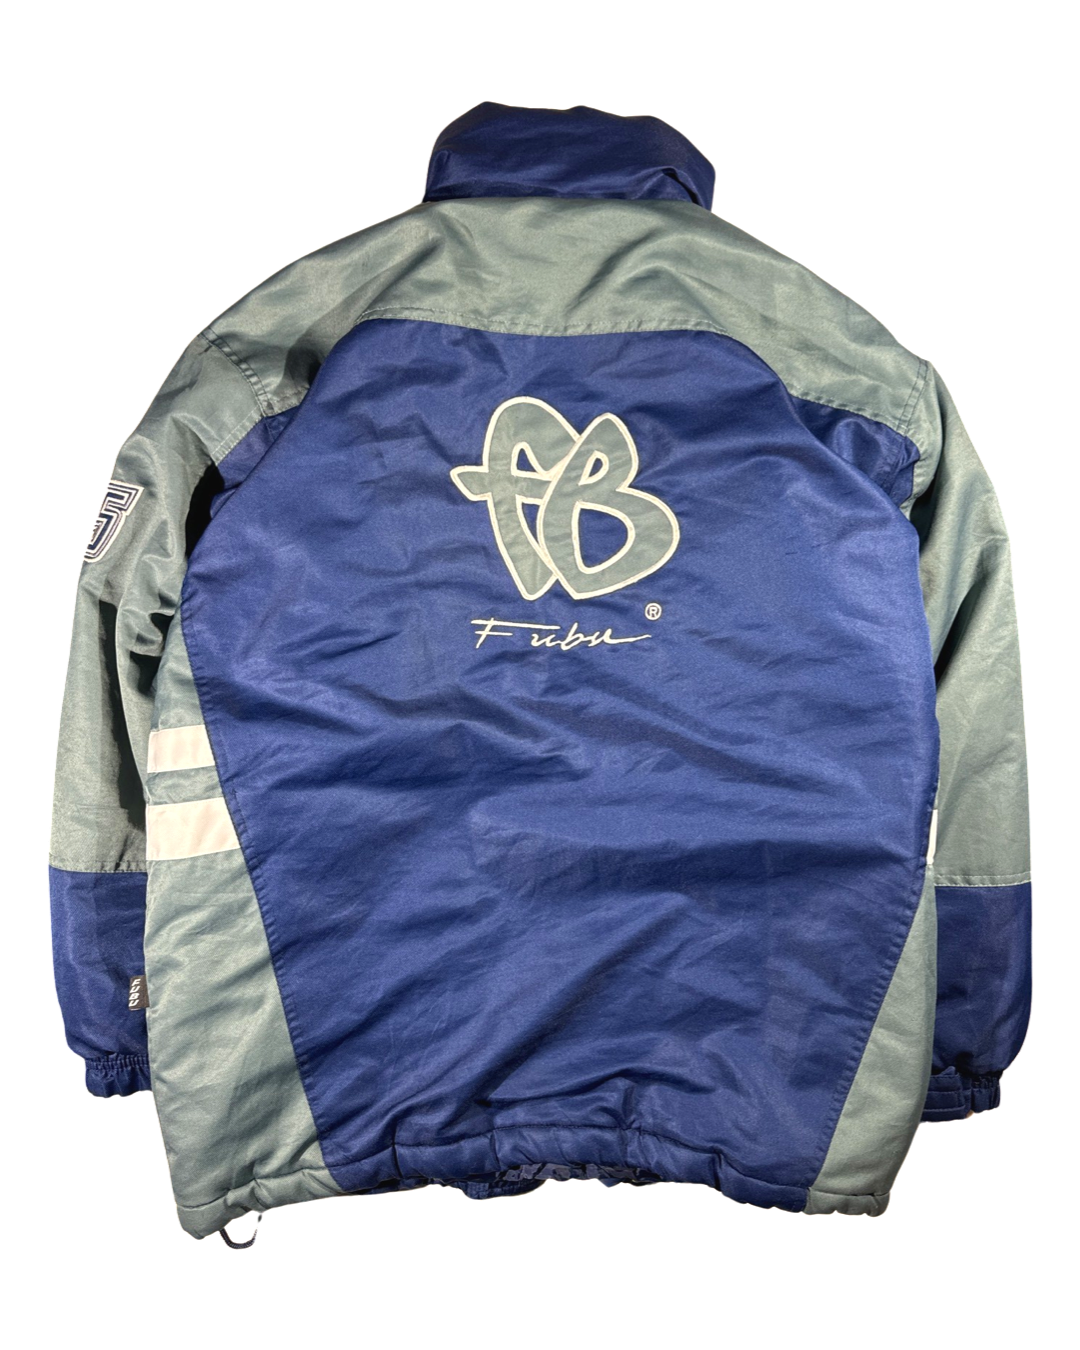 Vintage Fubu Padded Jacket - XL